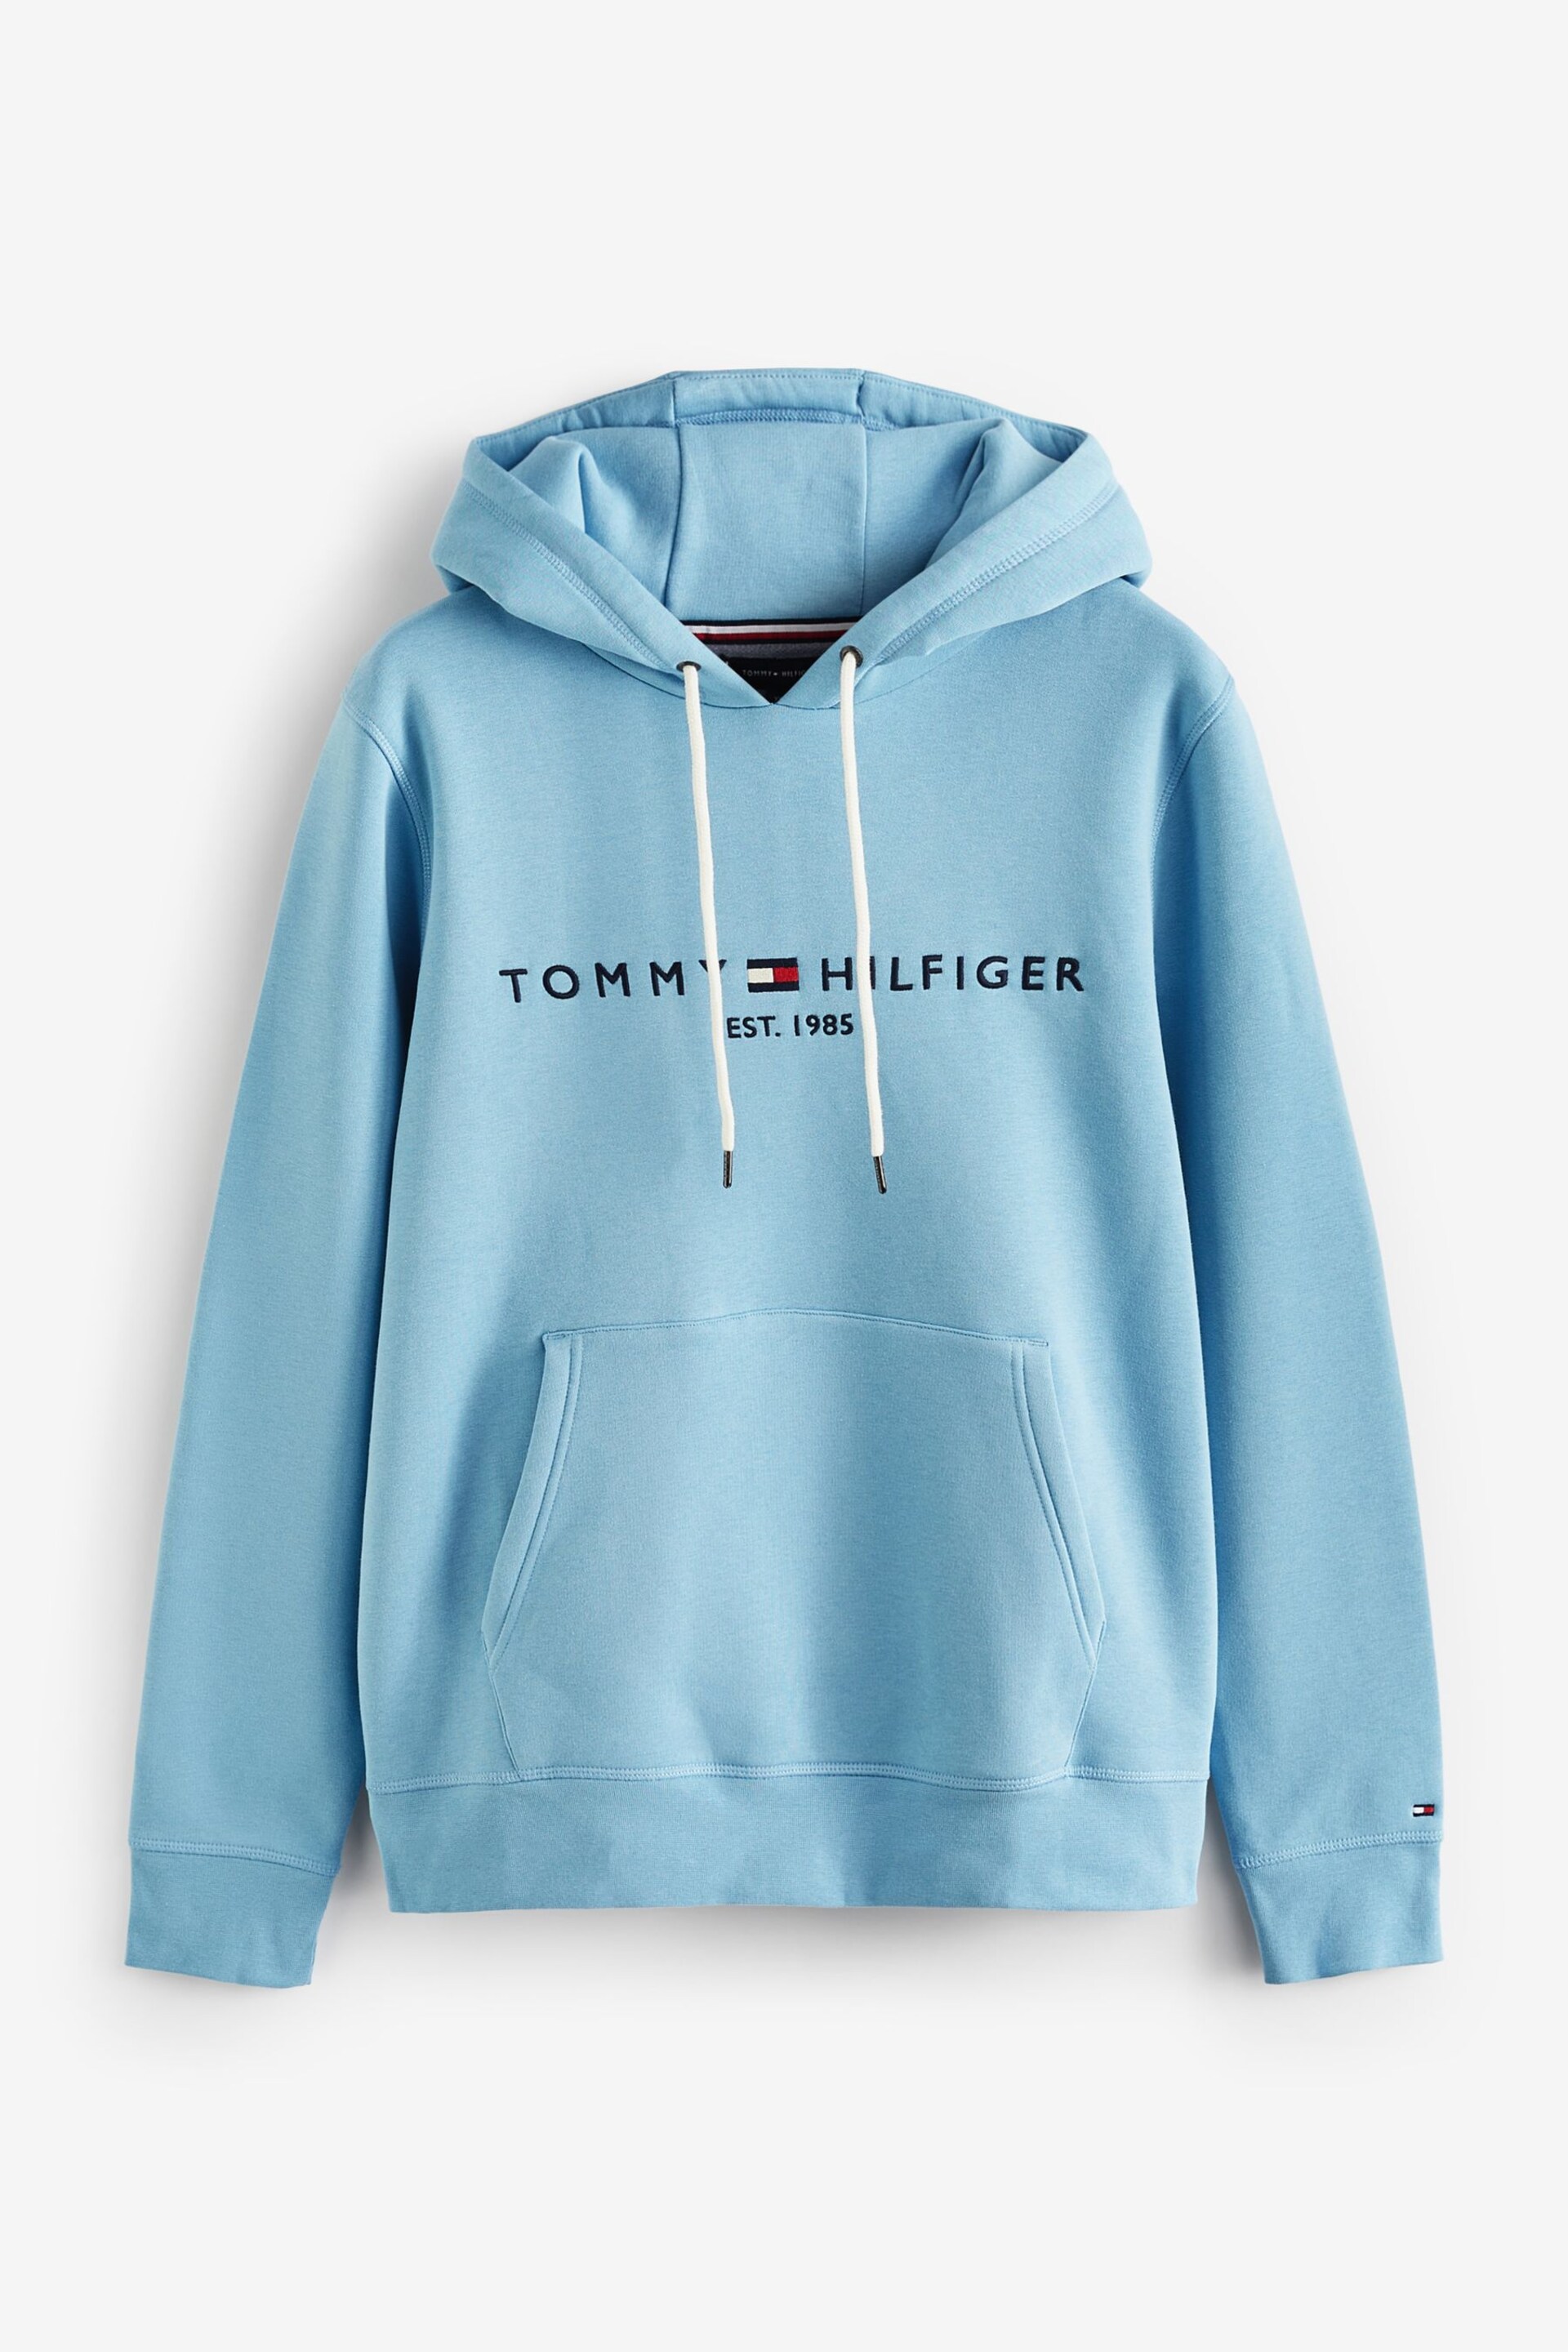 Tommy Hilfiger Blue Logo Hoodie - Image 4 of 4